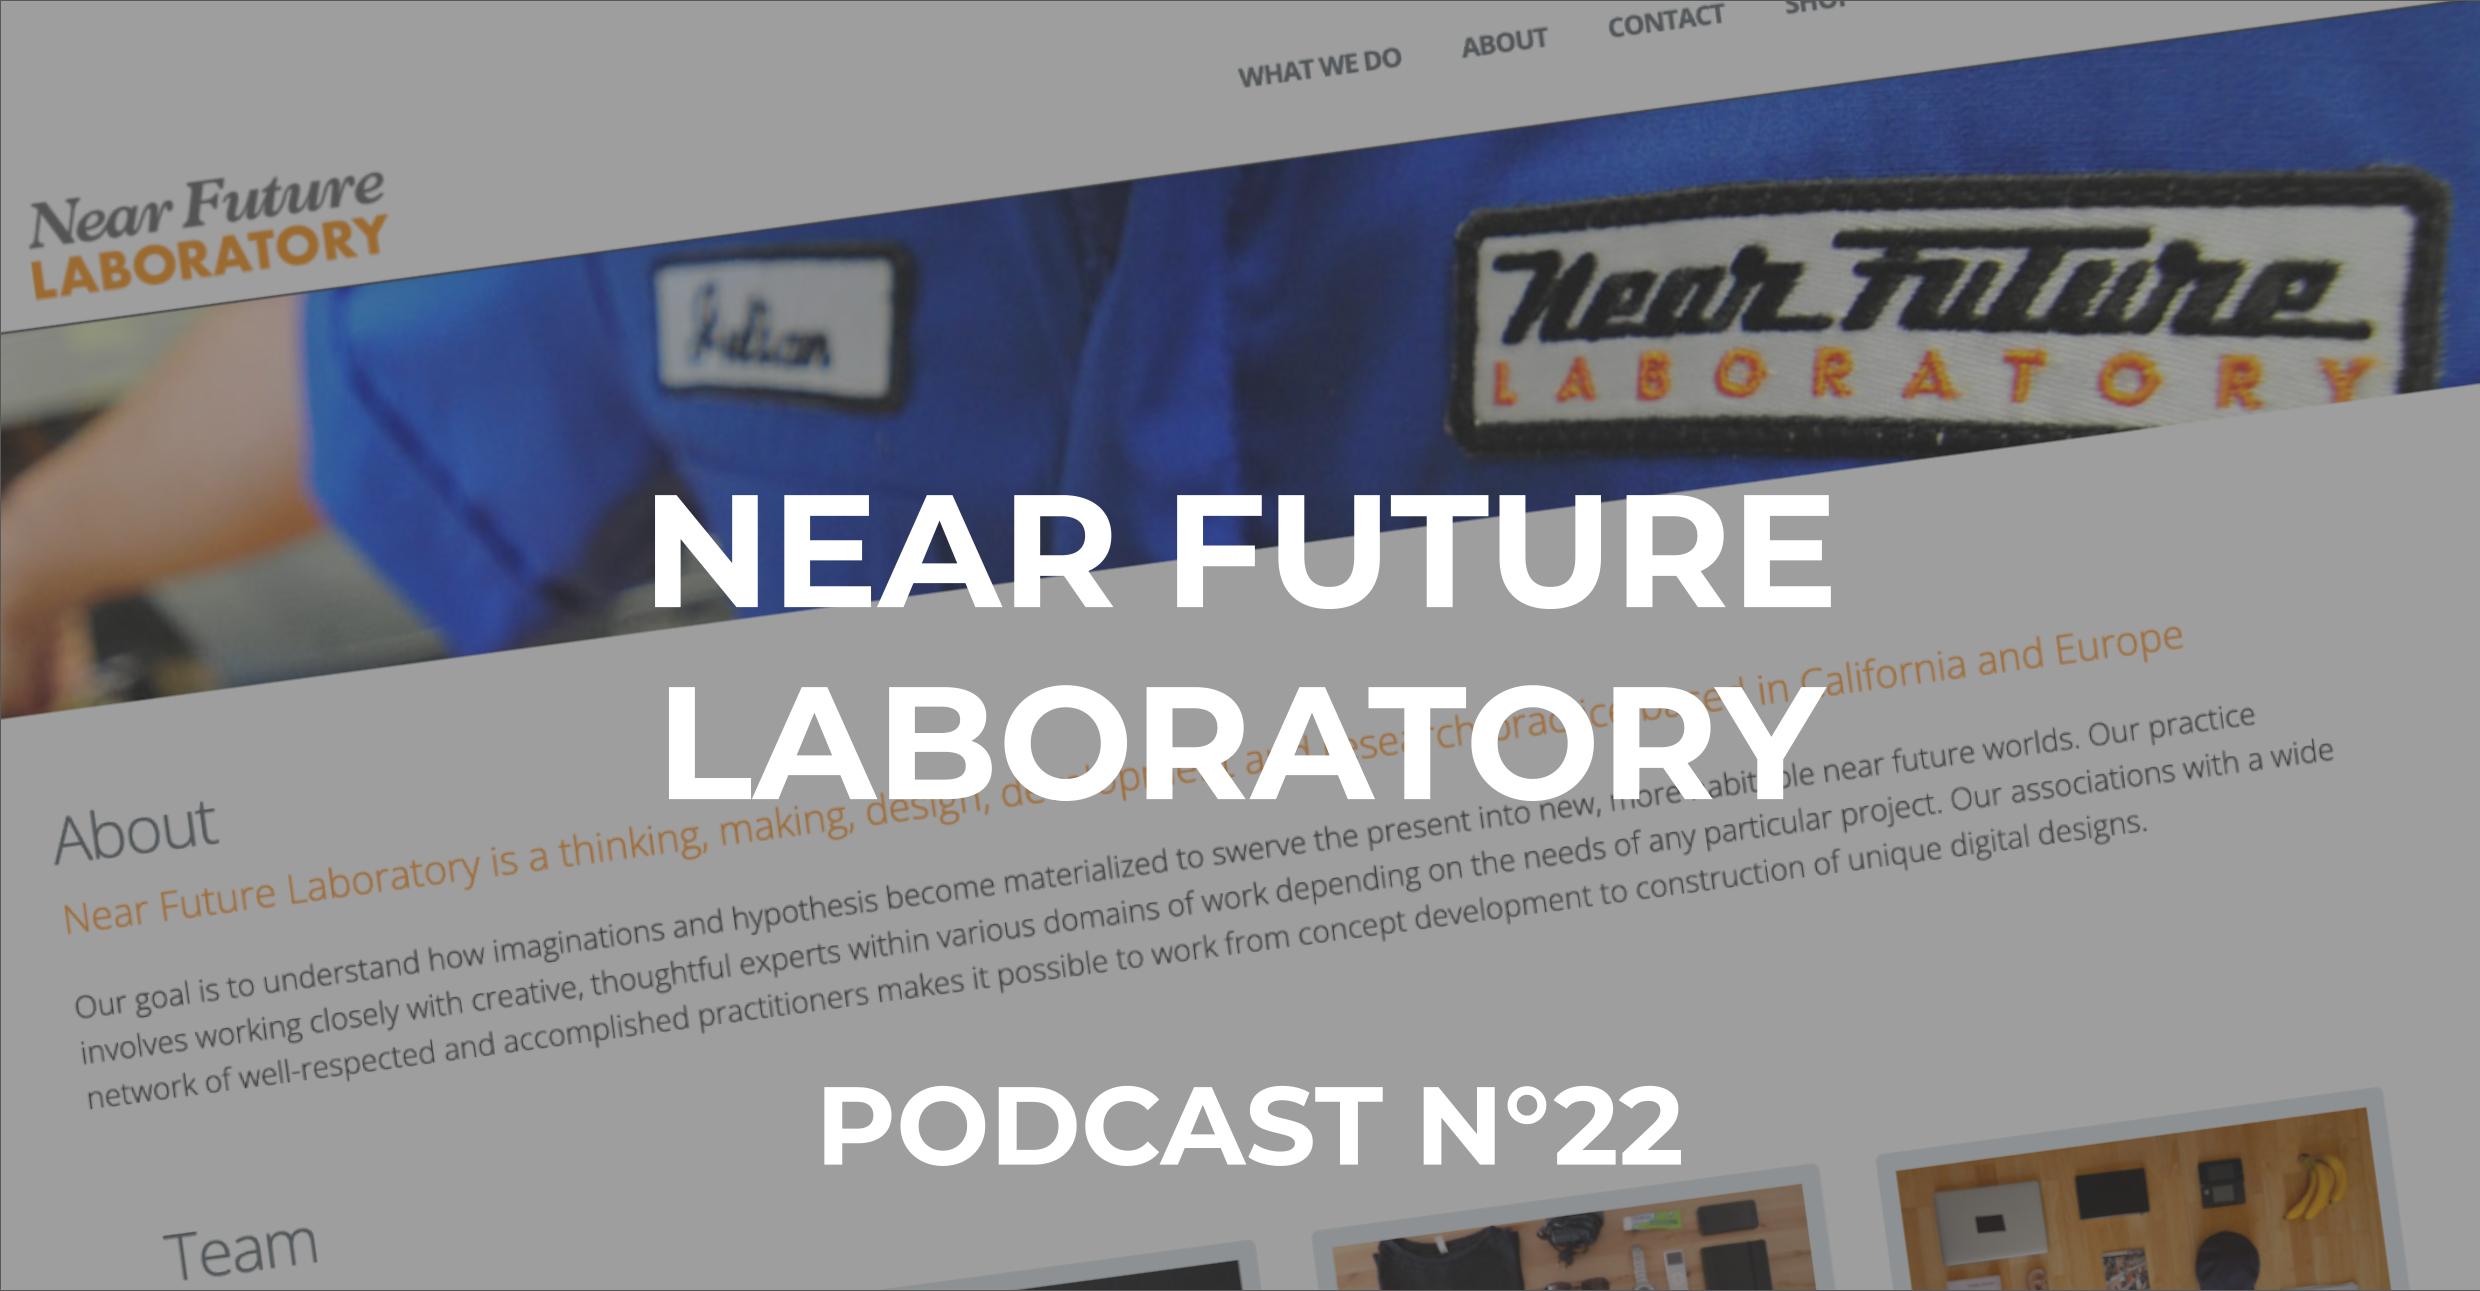 Near Future Laboratory Podcast N°22